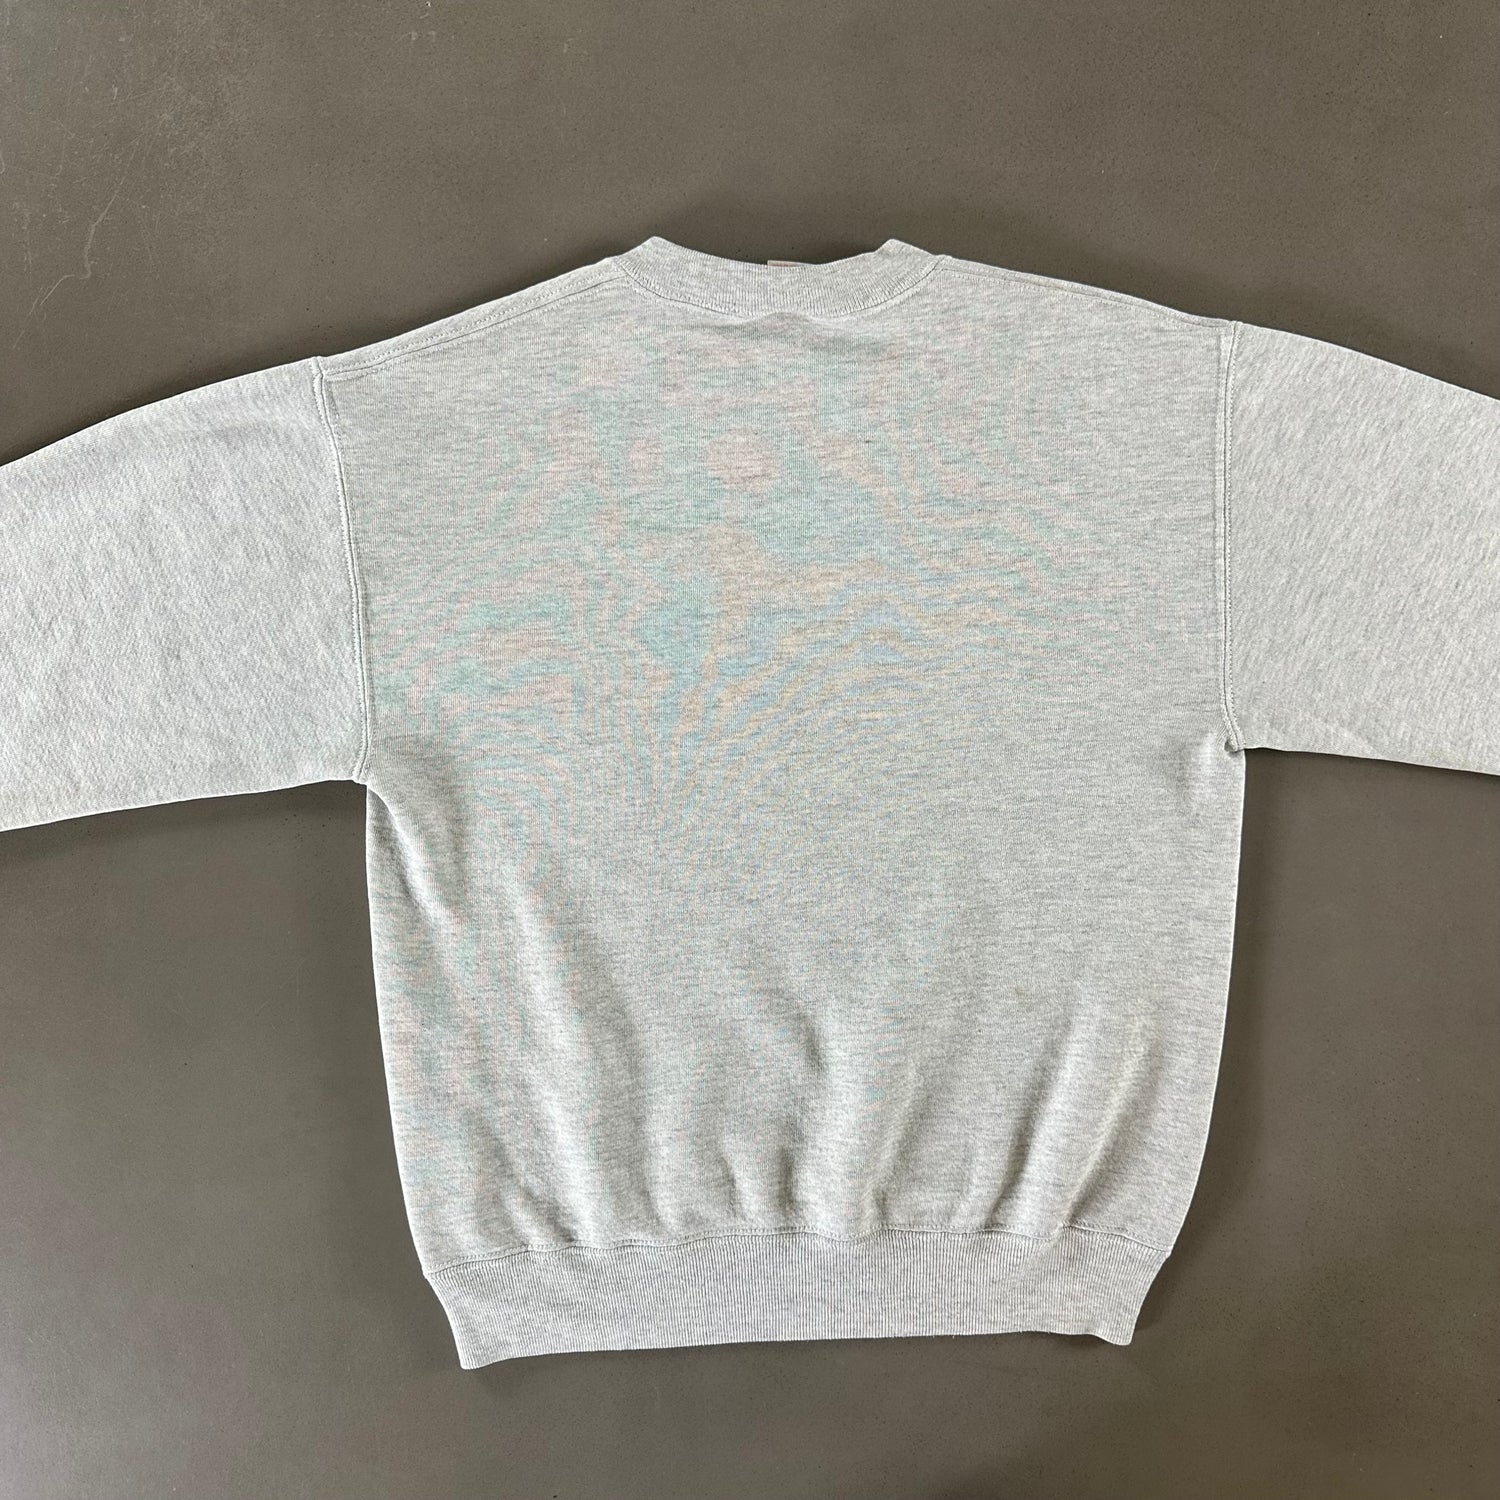 Vintage 1990s San Francisco Sweatshirt size Medium